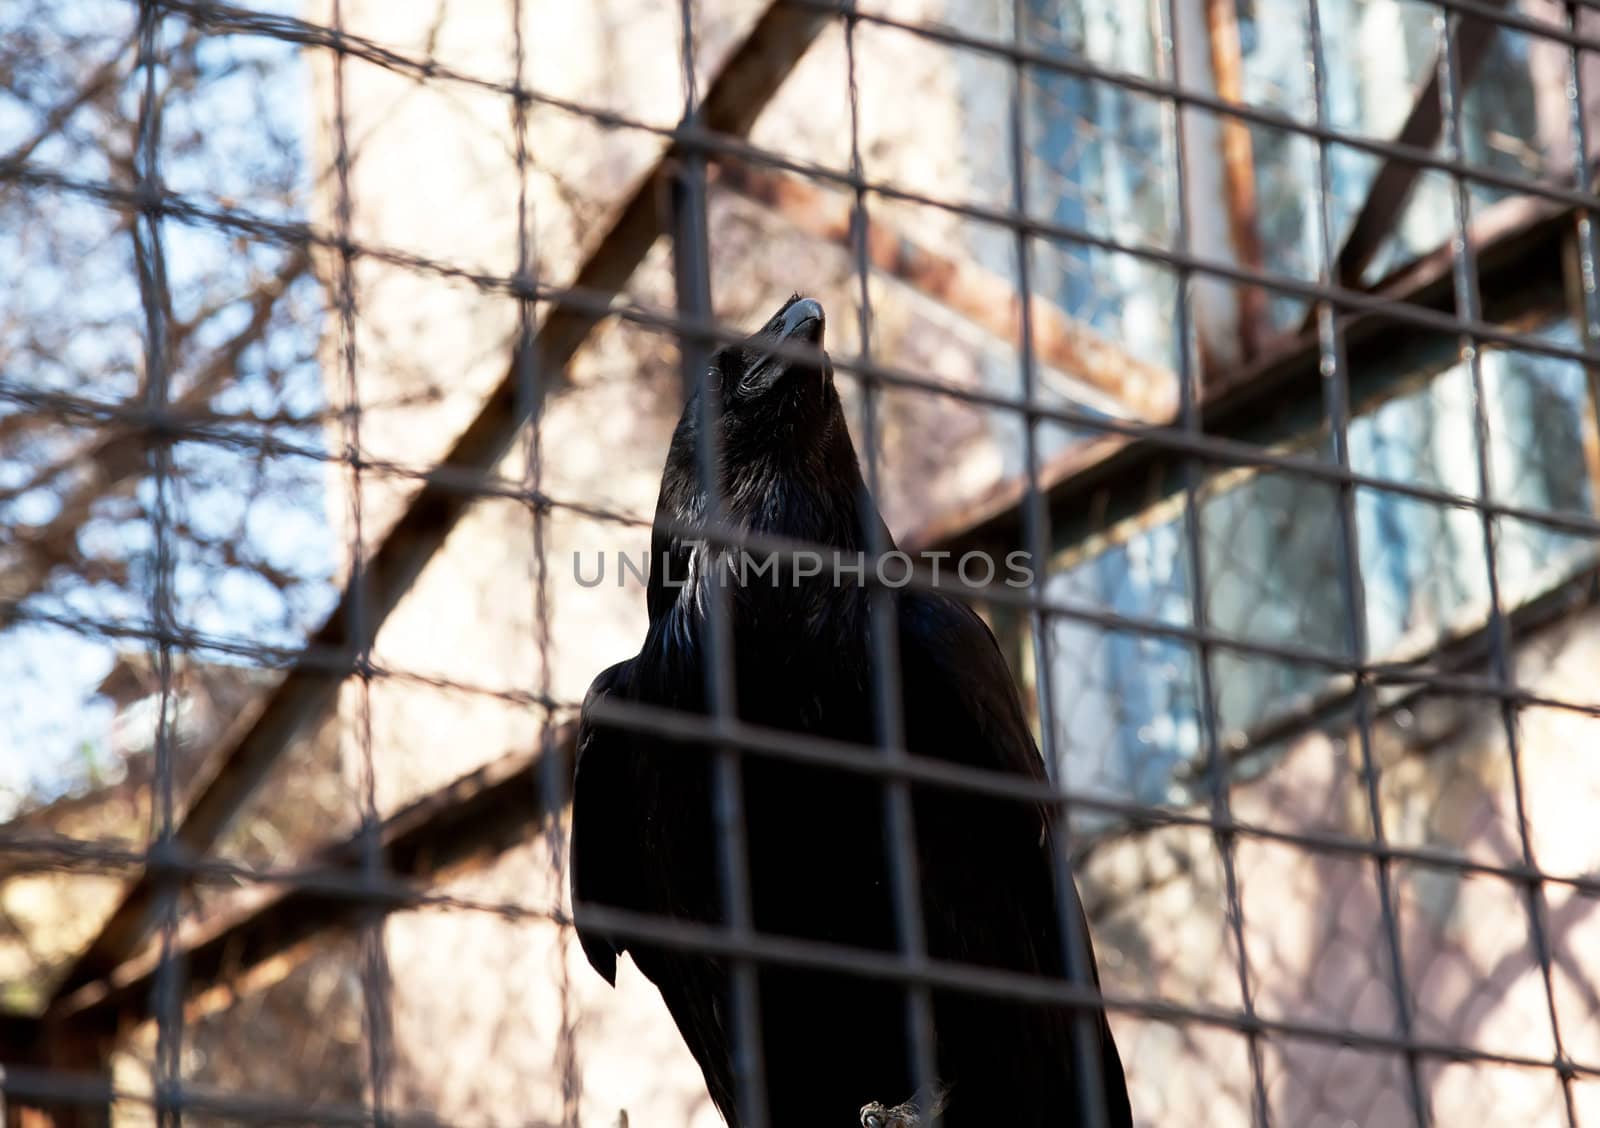 Black raven in cage